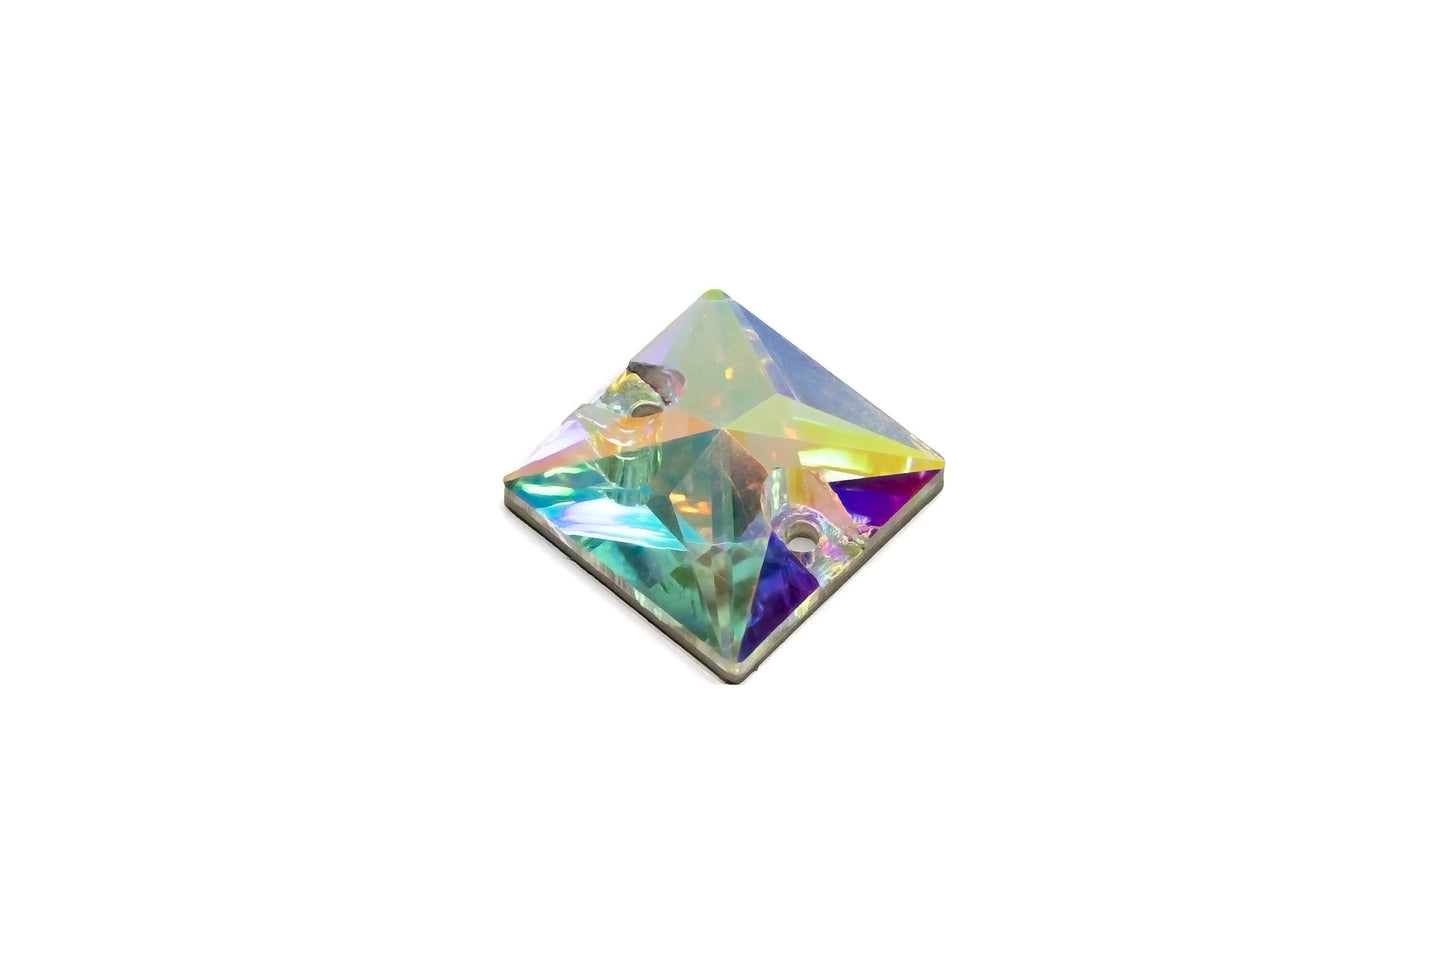 Crystal AB ♦ MM12 ♦ Stone - 1pc. ♦ Premium DMC ♦ Sew-On ♦ Square